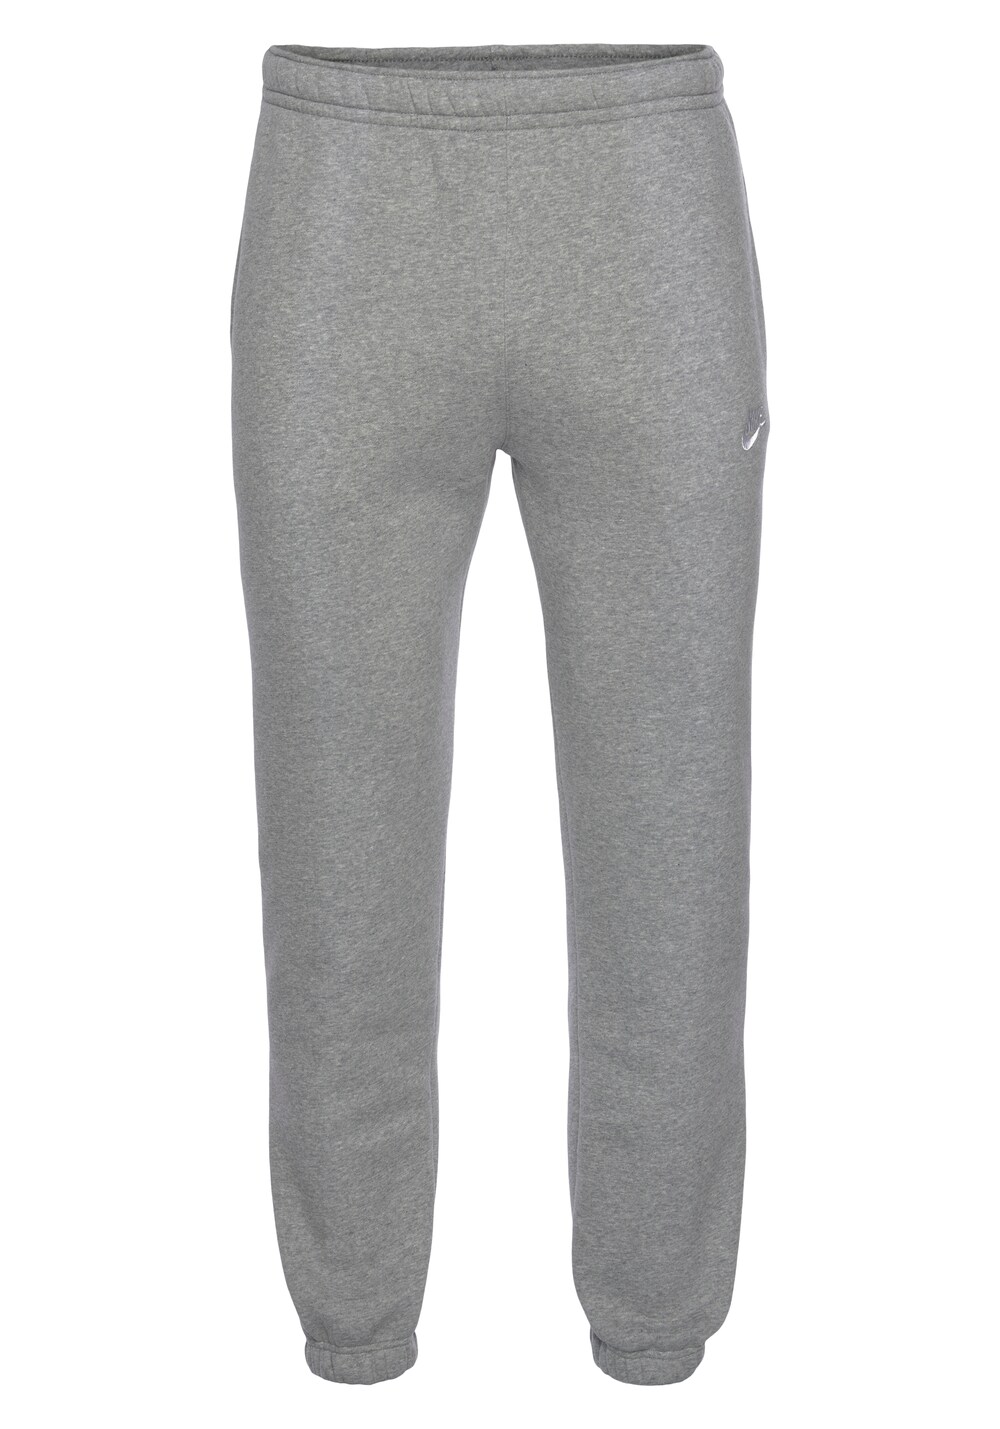 Зауженные брюки Nike Sportswear Club Fleece, пестрый серый